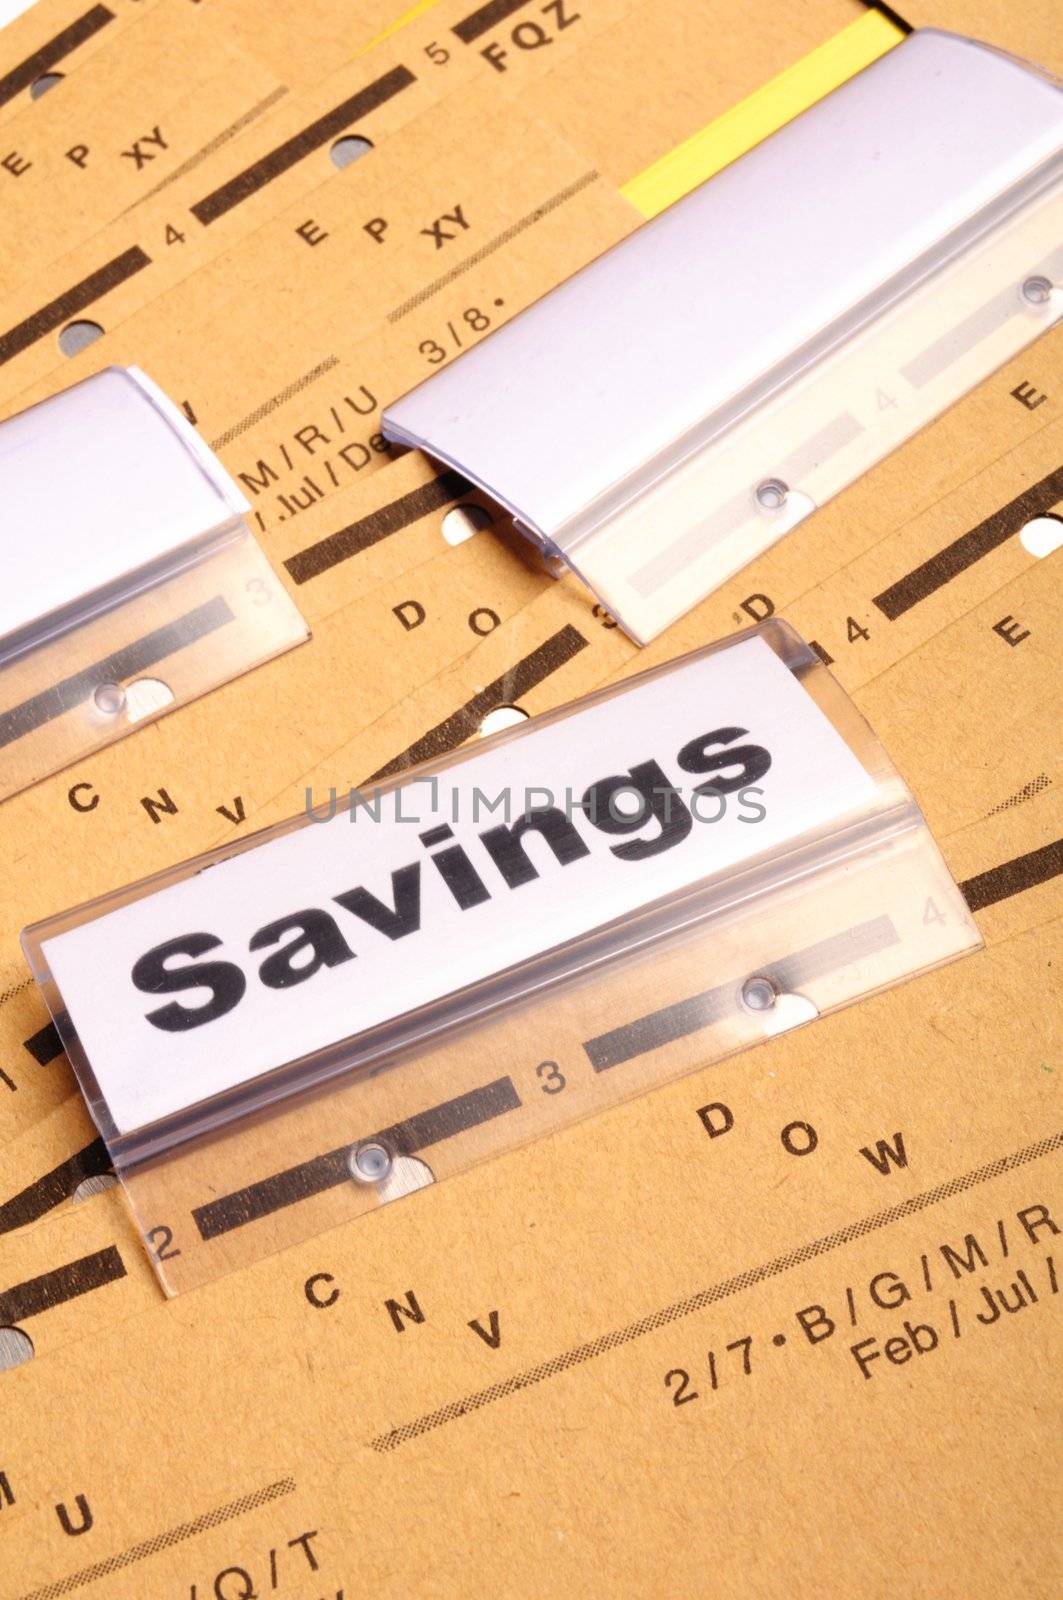 savings word on business folder showing saving money concept